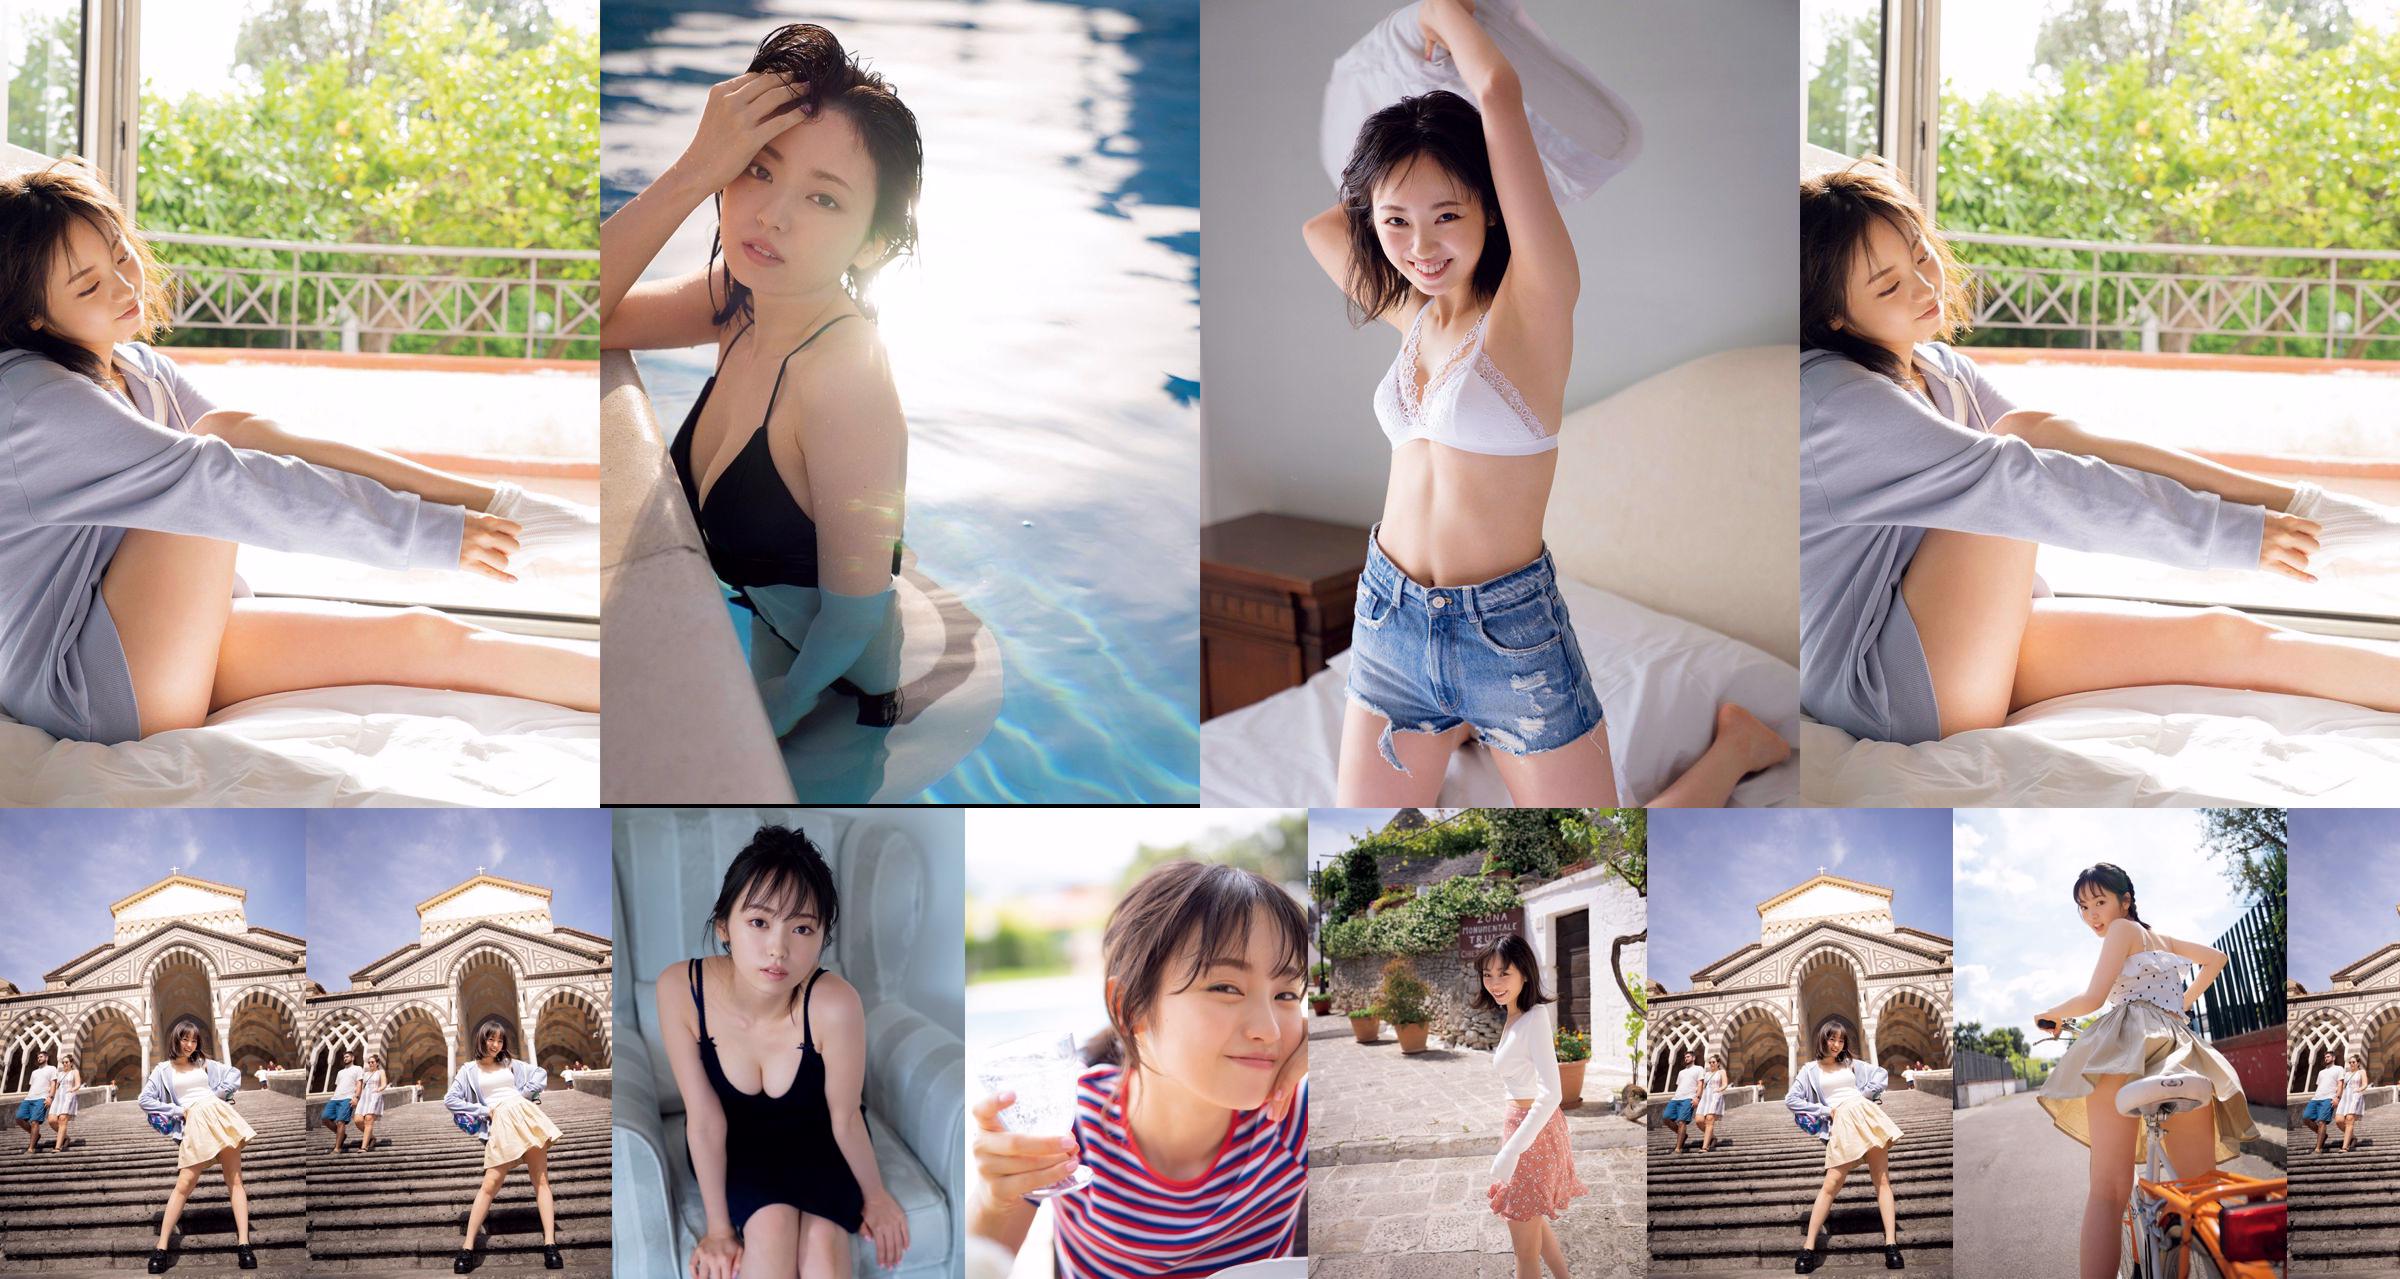 [VENDREDI] Keyakizaka46, Yui Imaizumi "Maillot de bain et lingerie de" First and Last! "" Photo No.5c85cc Page 1